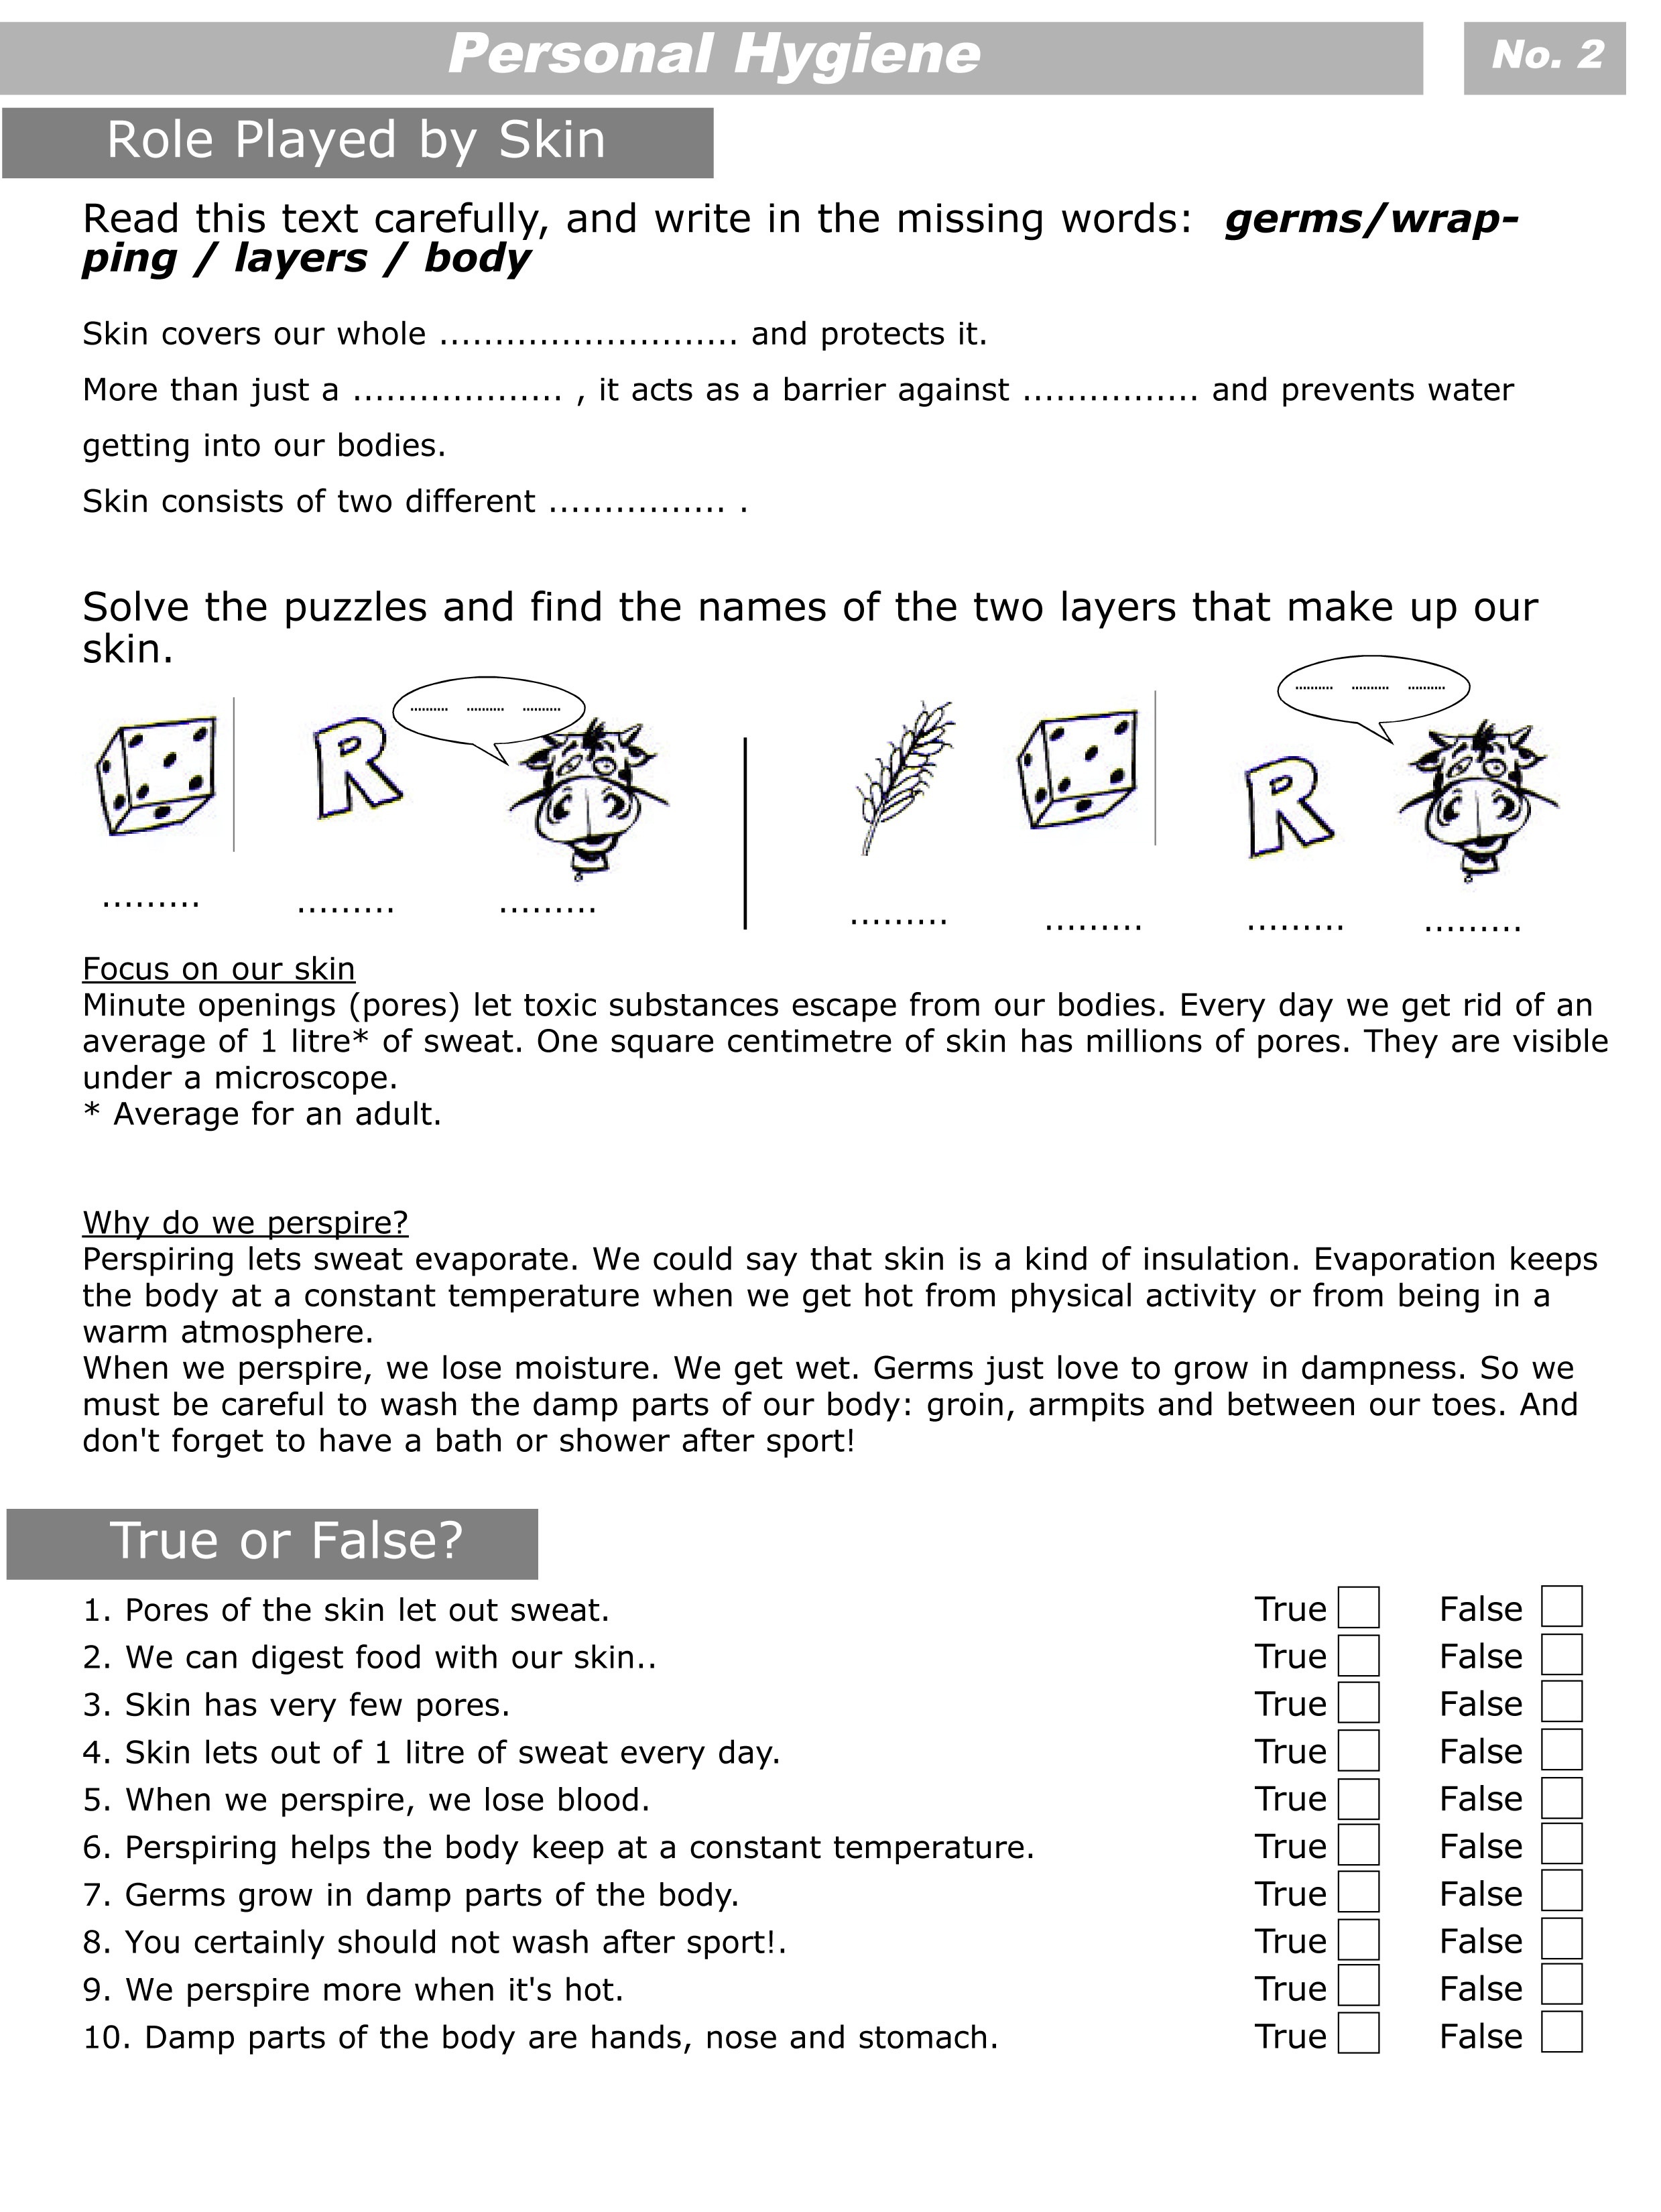 Personal Hygiene Worksheets For Kids Level 2 | Personal Hygiene - Free Printable Personal Hygiene Worksheets